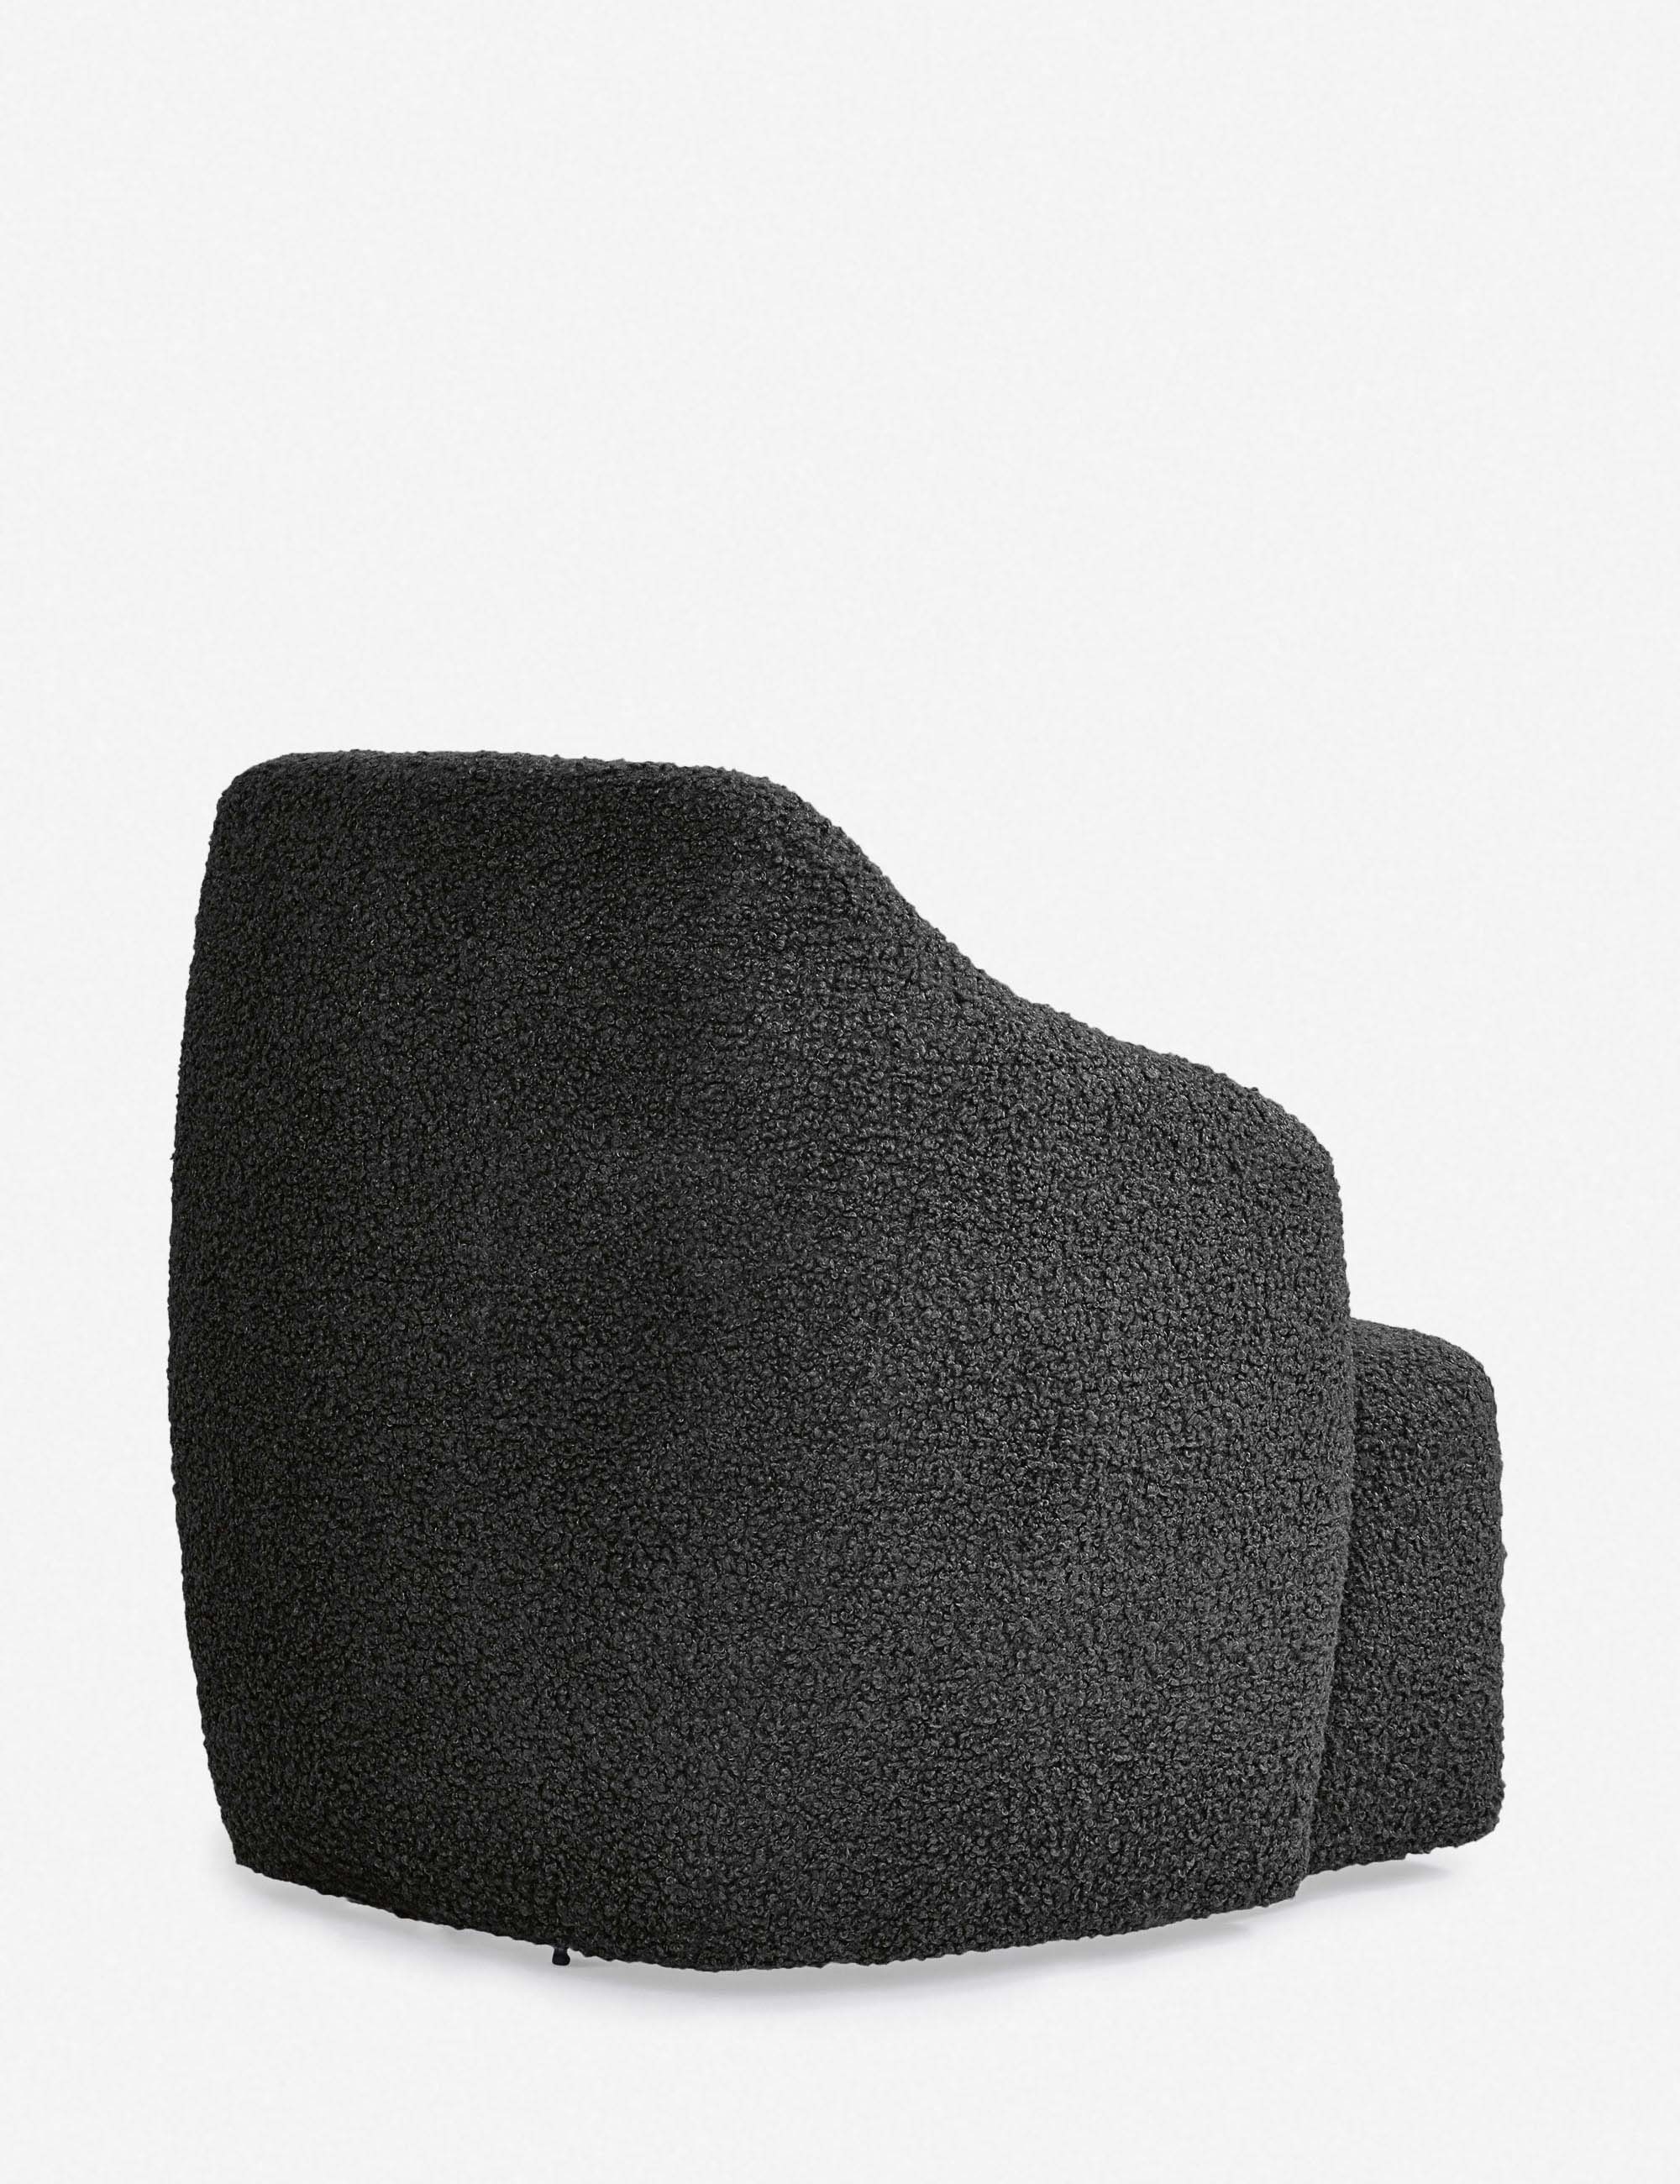 Tobi Swivel Chair - Image 3